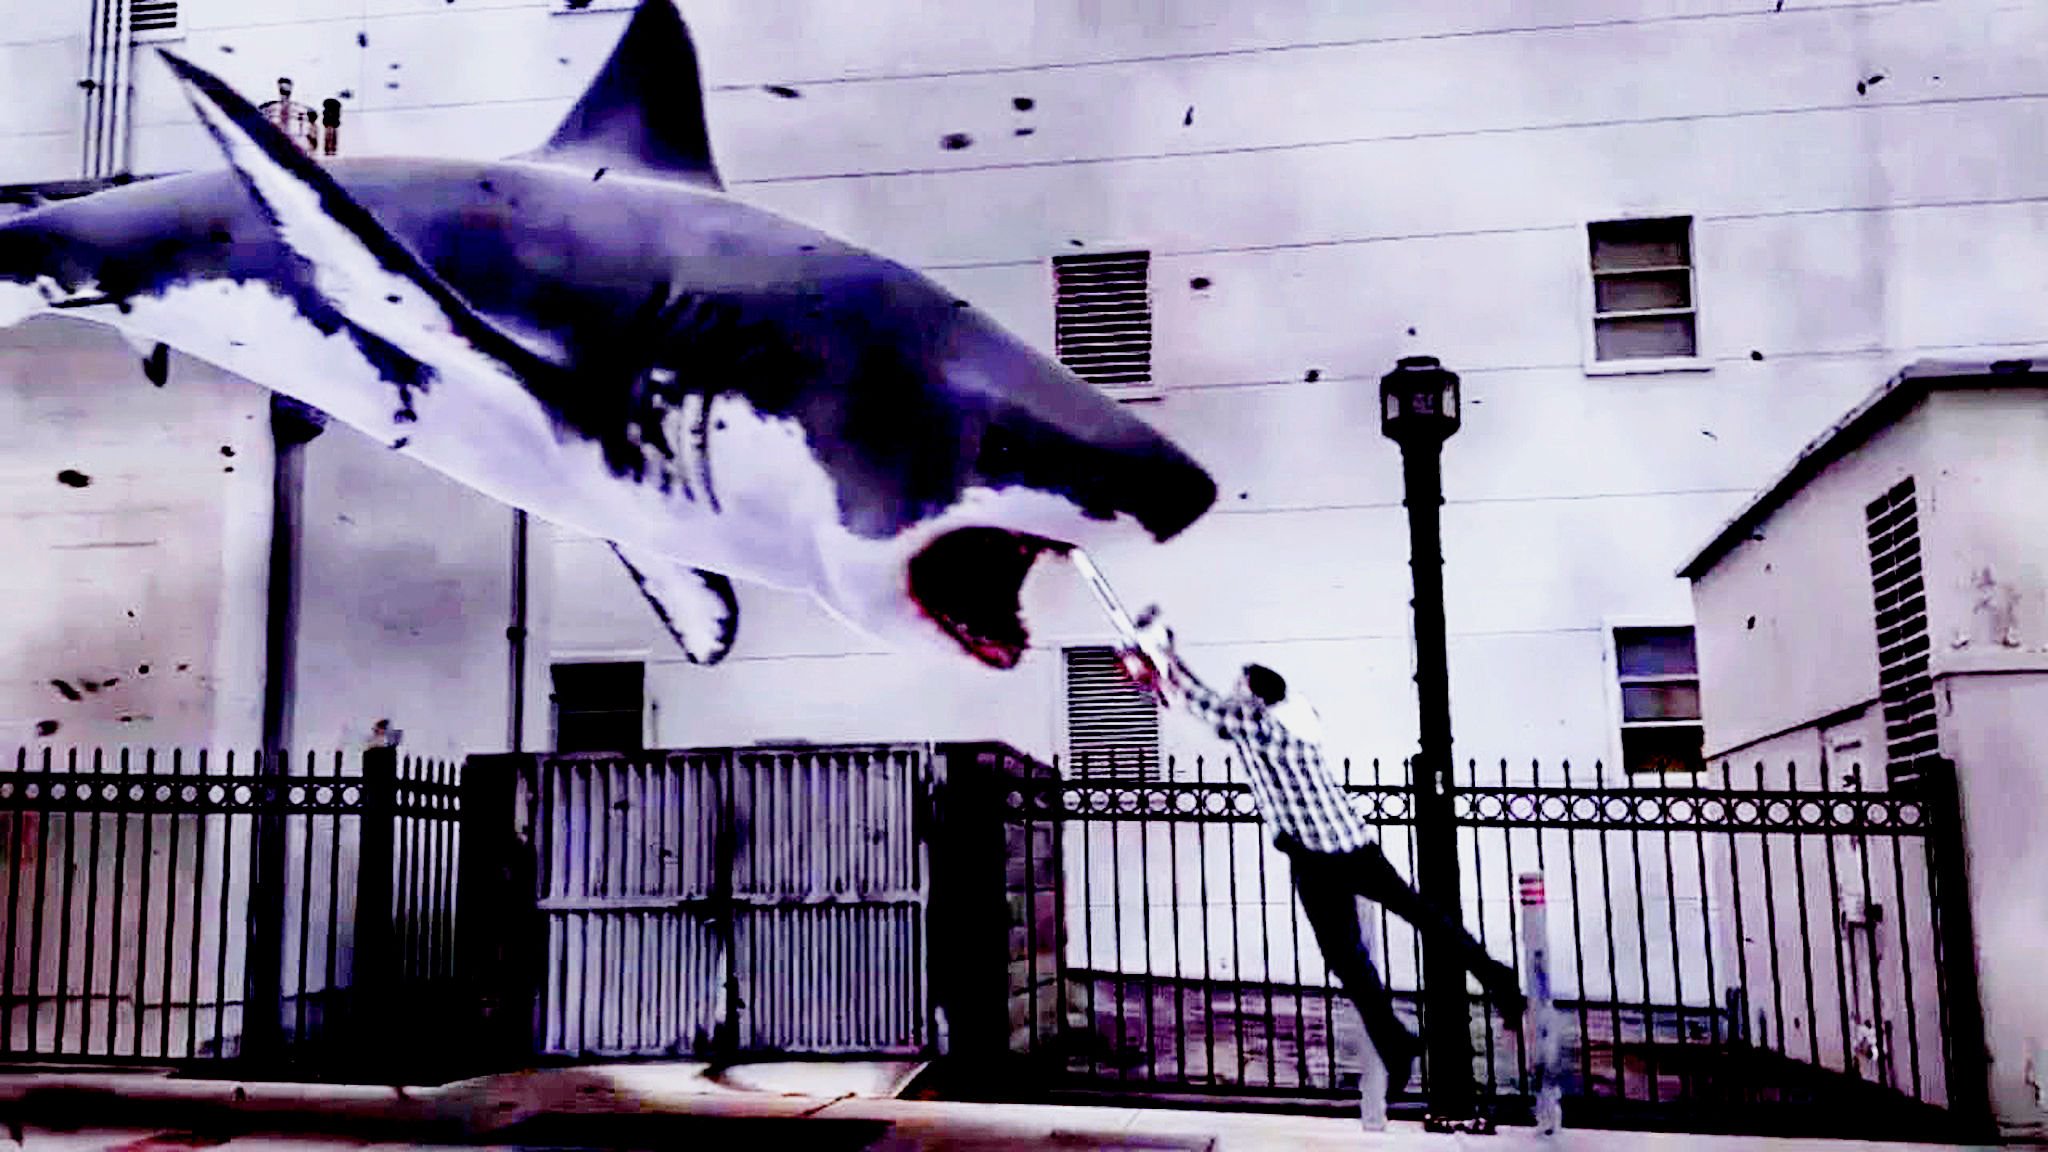 fond d'écran sharknado,art de rue,poisson cartilagineux,requin,poisson,mural